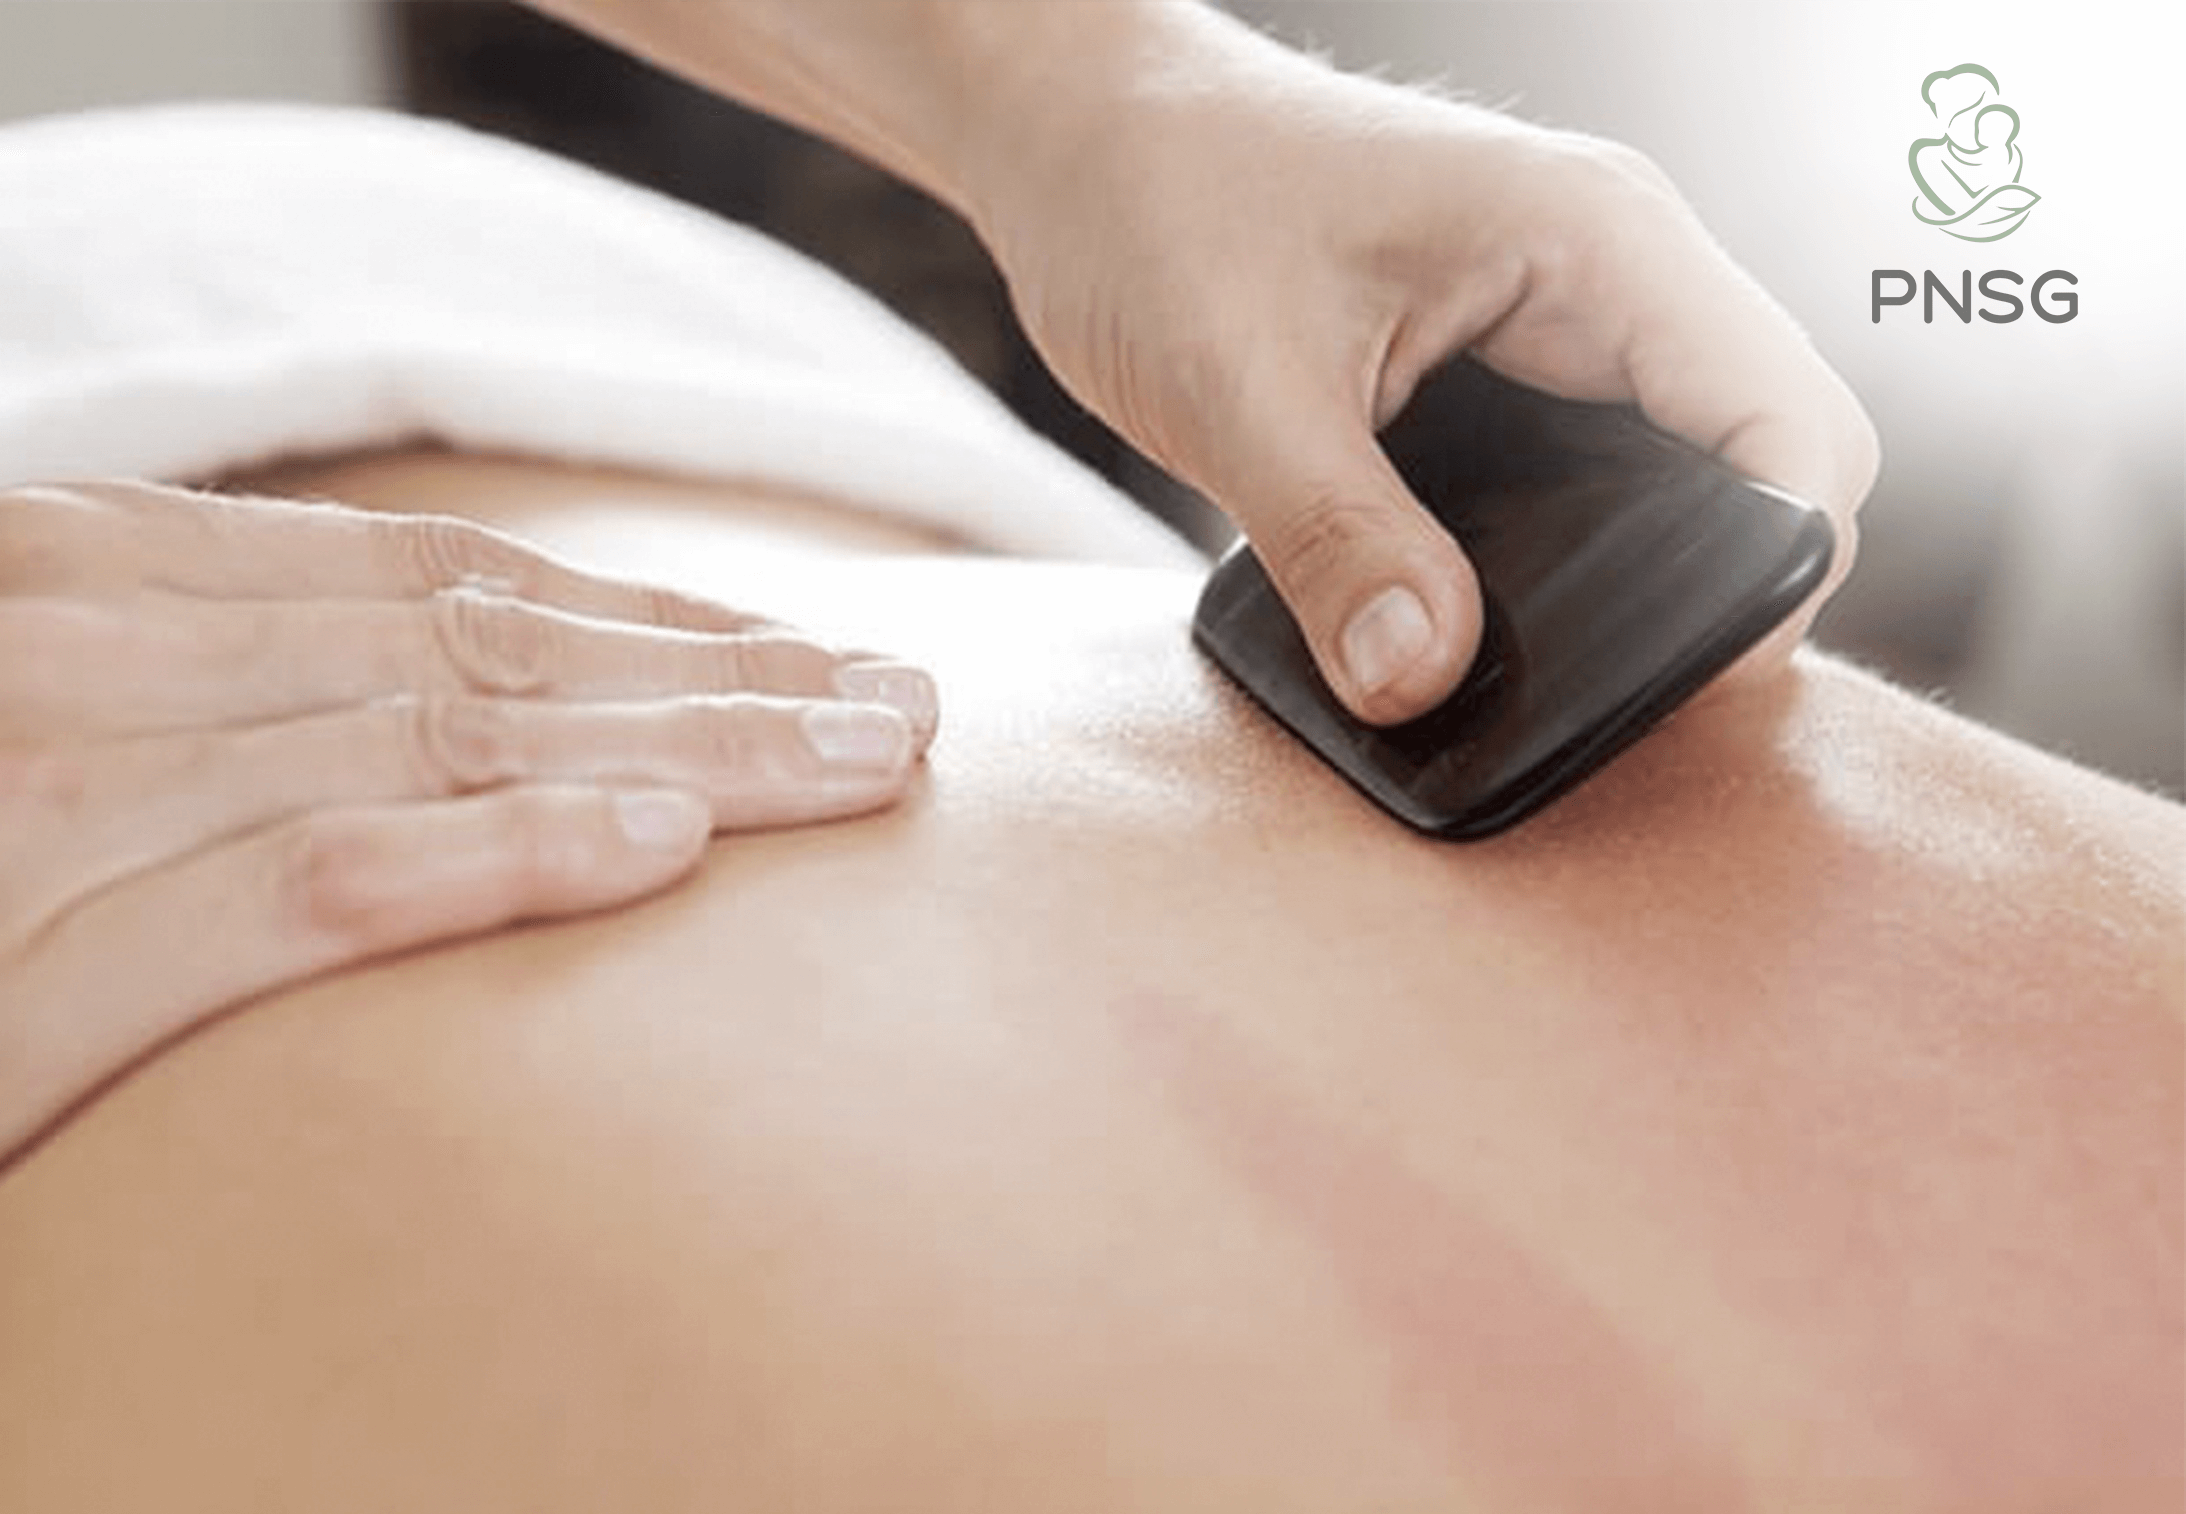 Jamu postnatal massage - PNSG Singapore